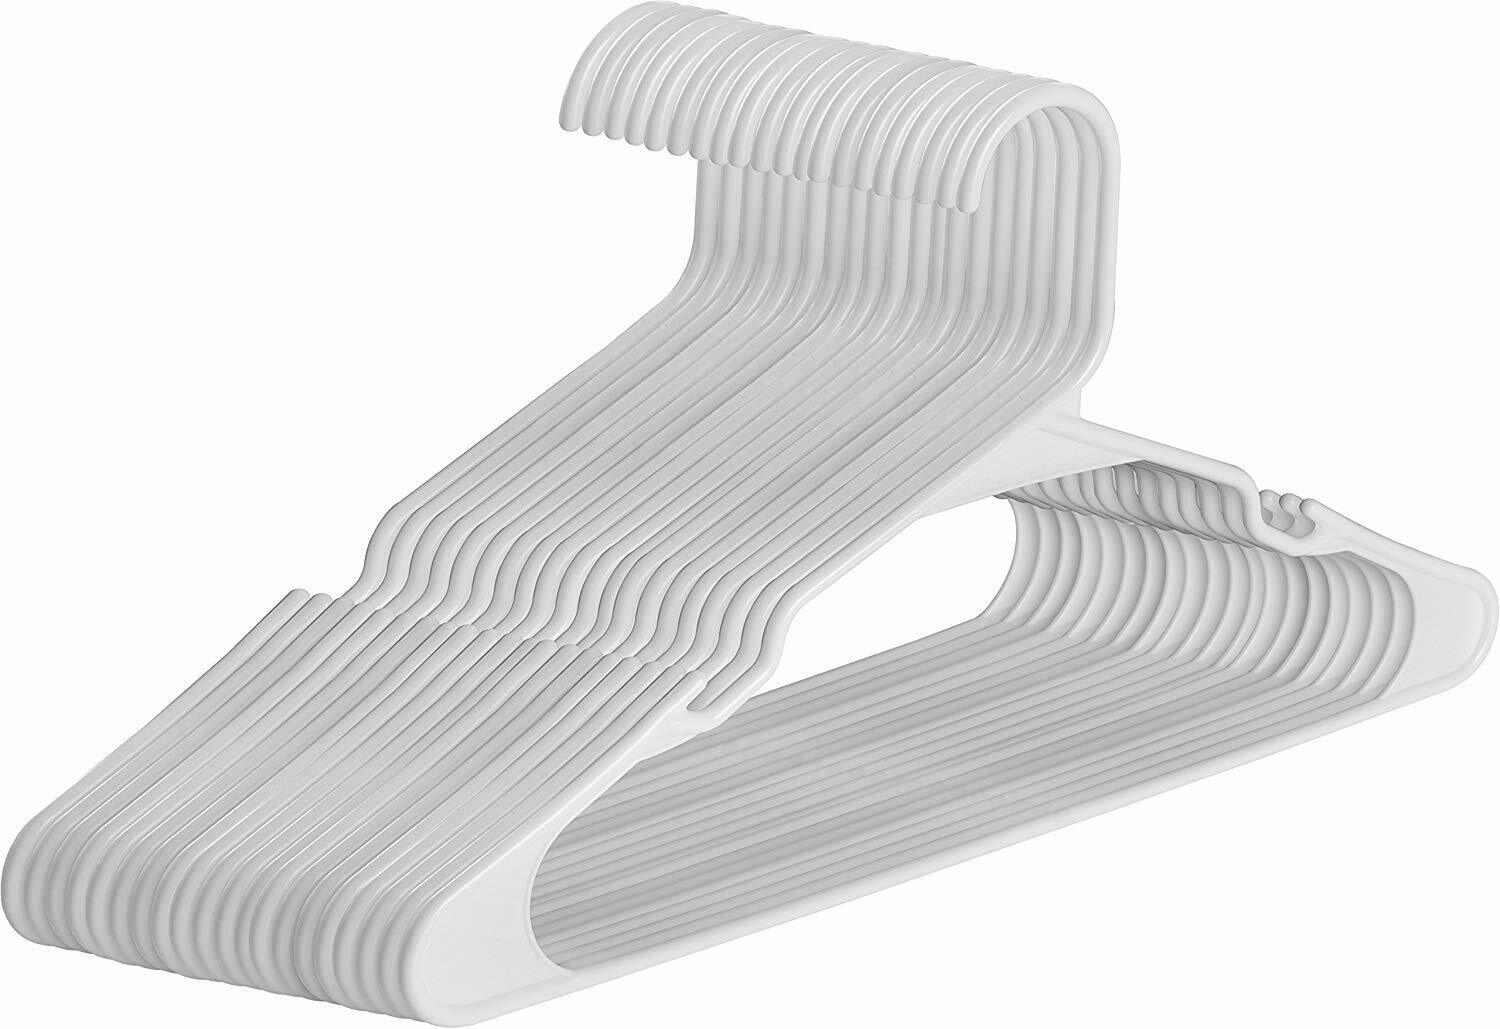 White Plastic Hangers Durable Slim Stylish New In Pack Of 30 & 150 Utopia Home